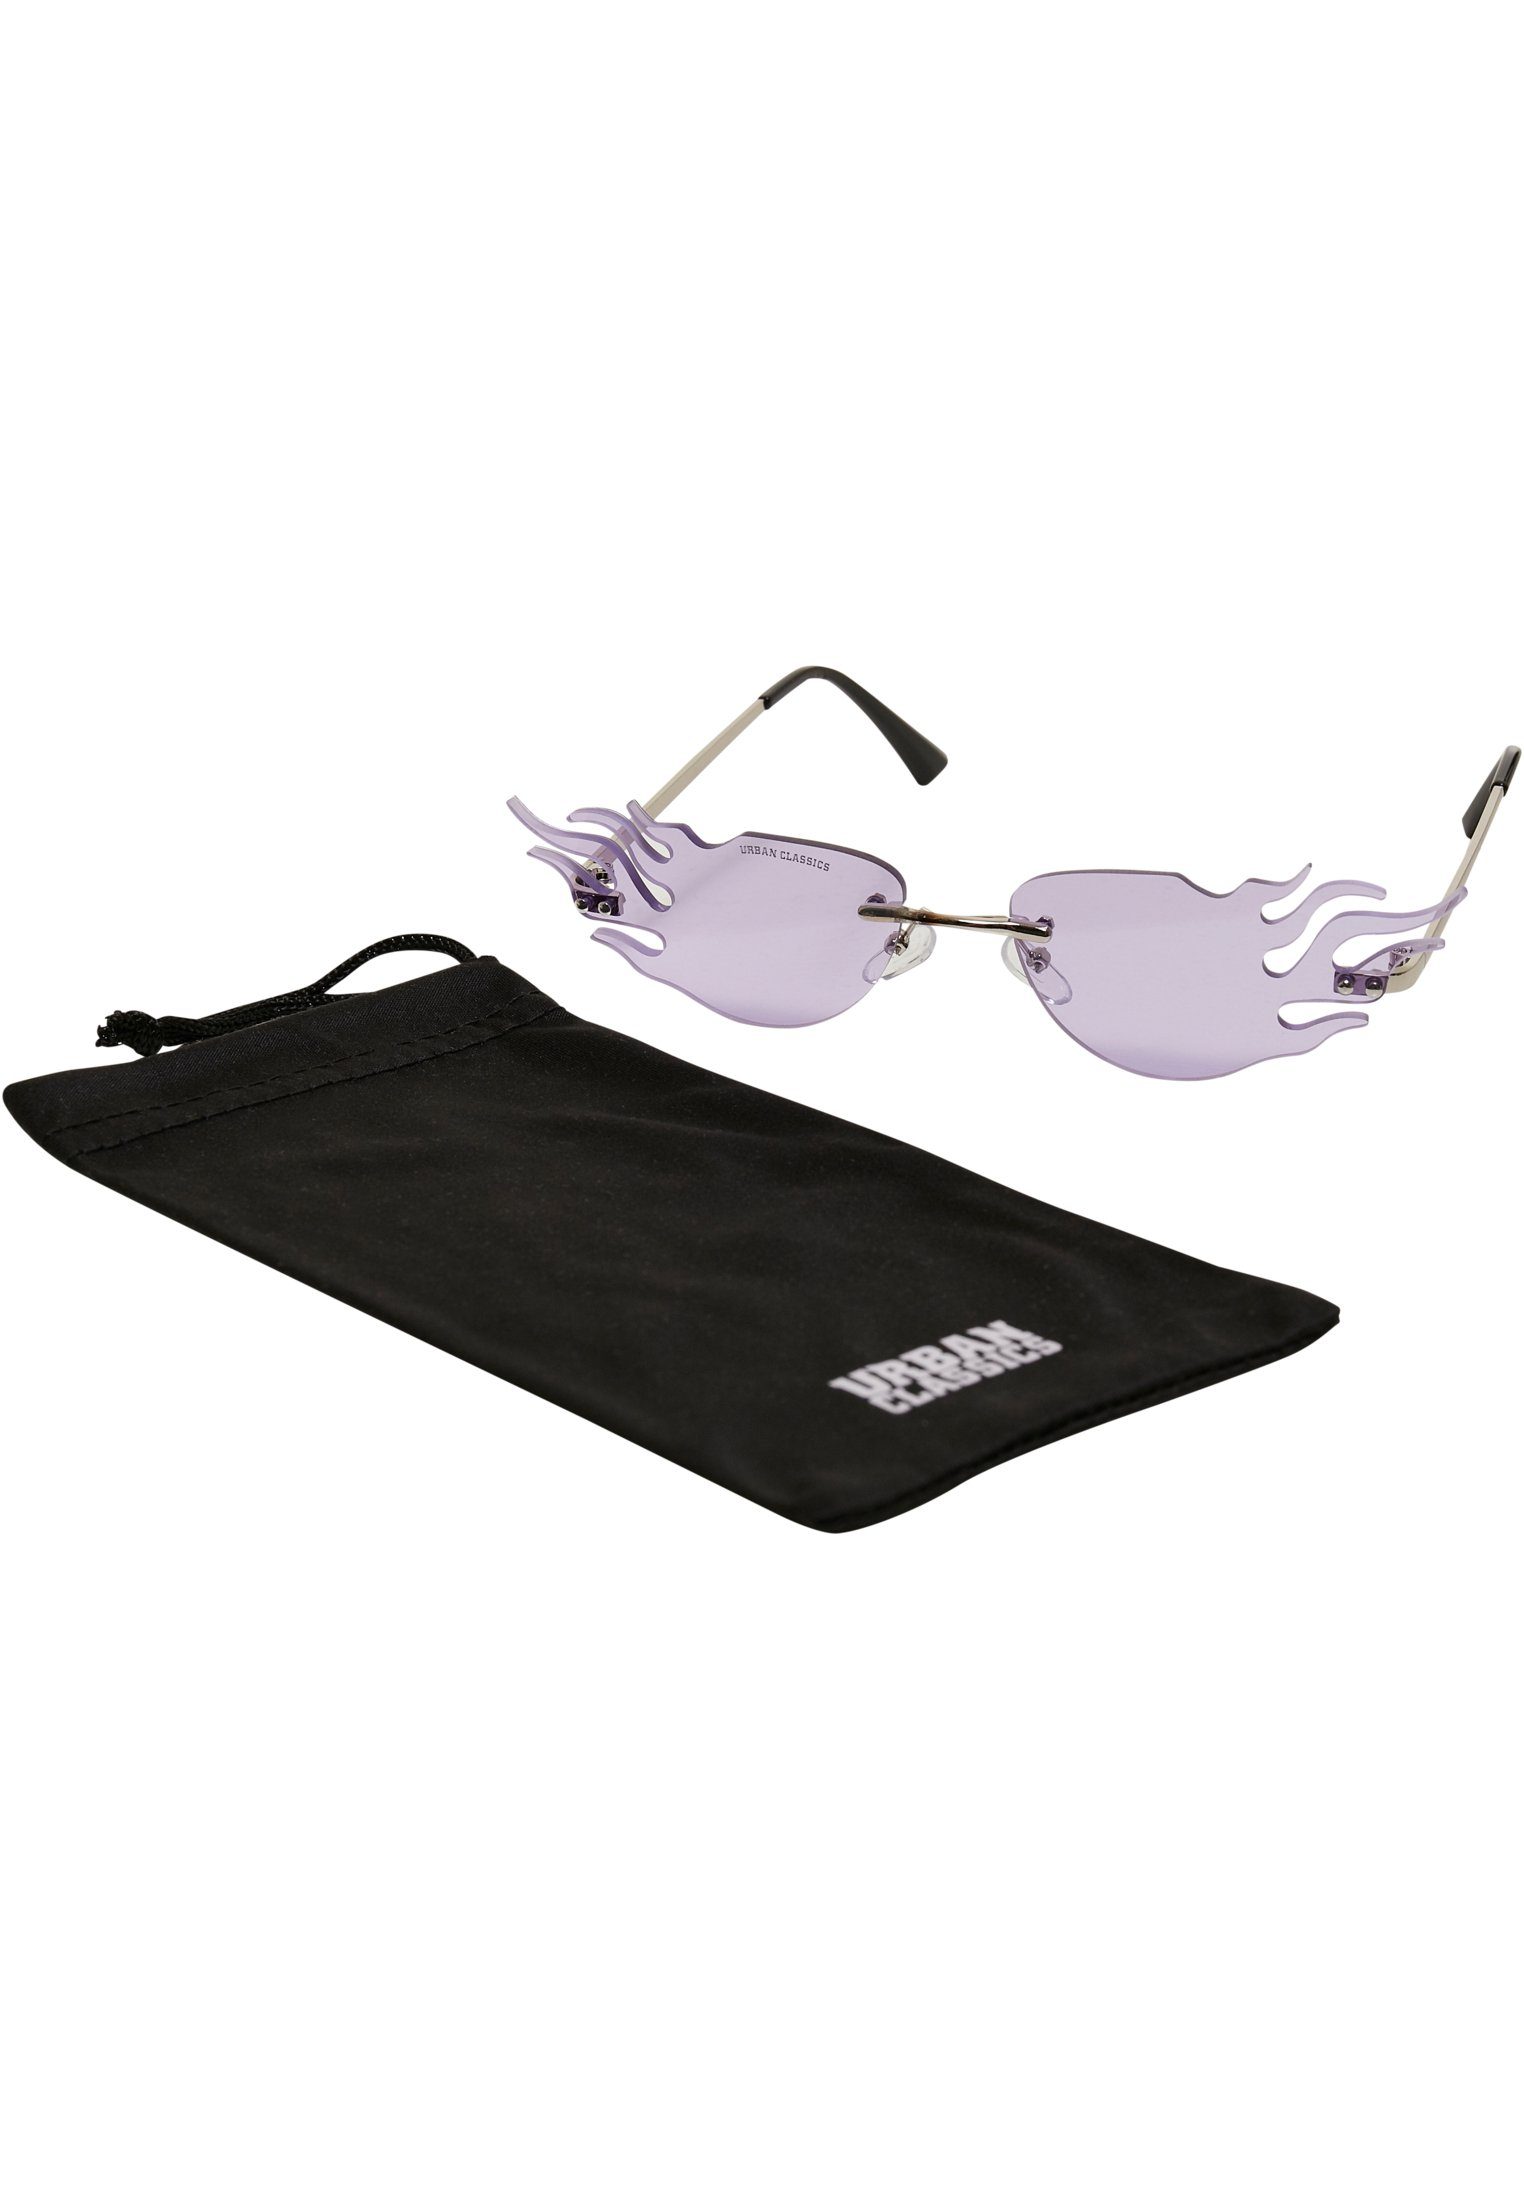 Flame Sonnenbrille CLASSICS URBAN Unisex Sunglasses